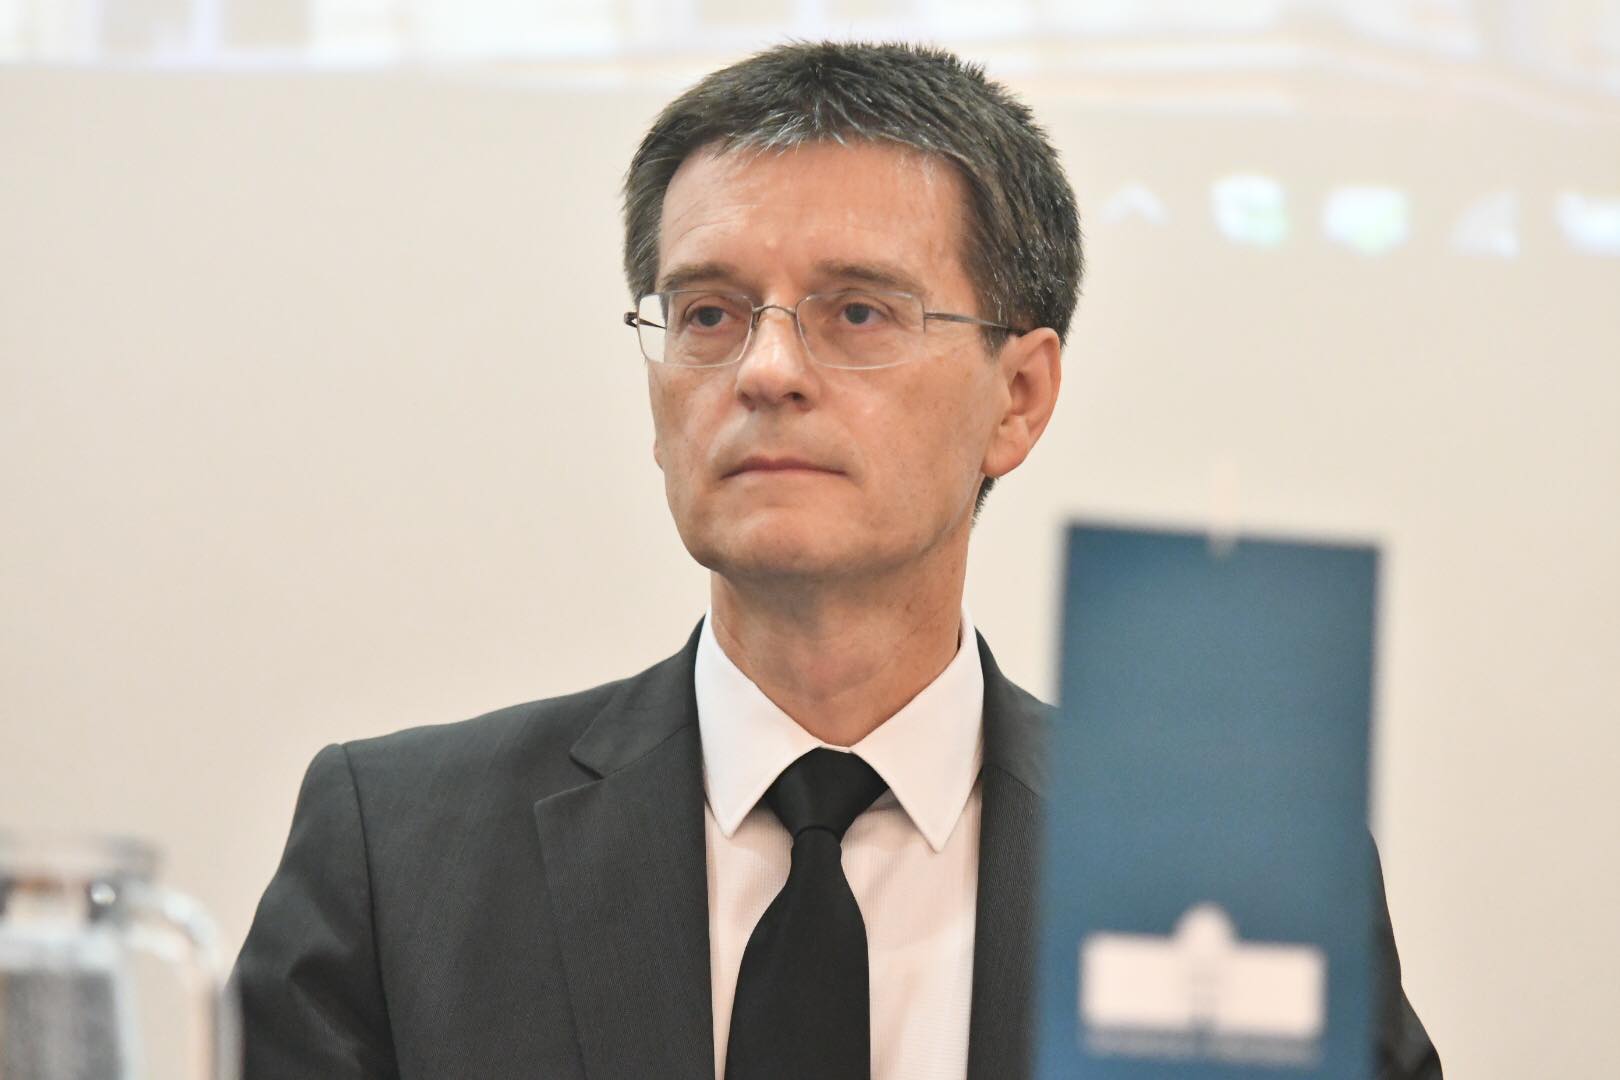 Senat mariborske univerze potrdil nov mandat rektorju Kačiču